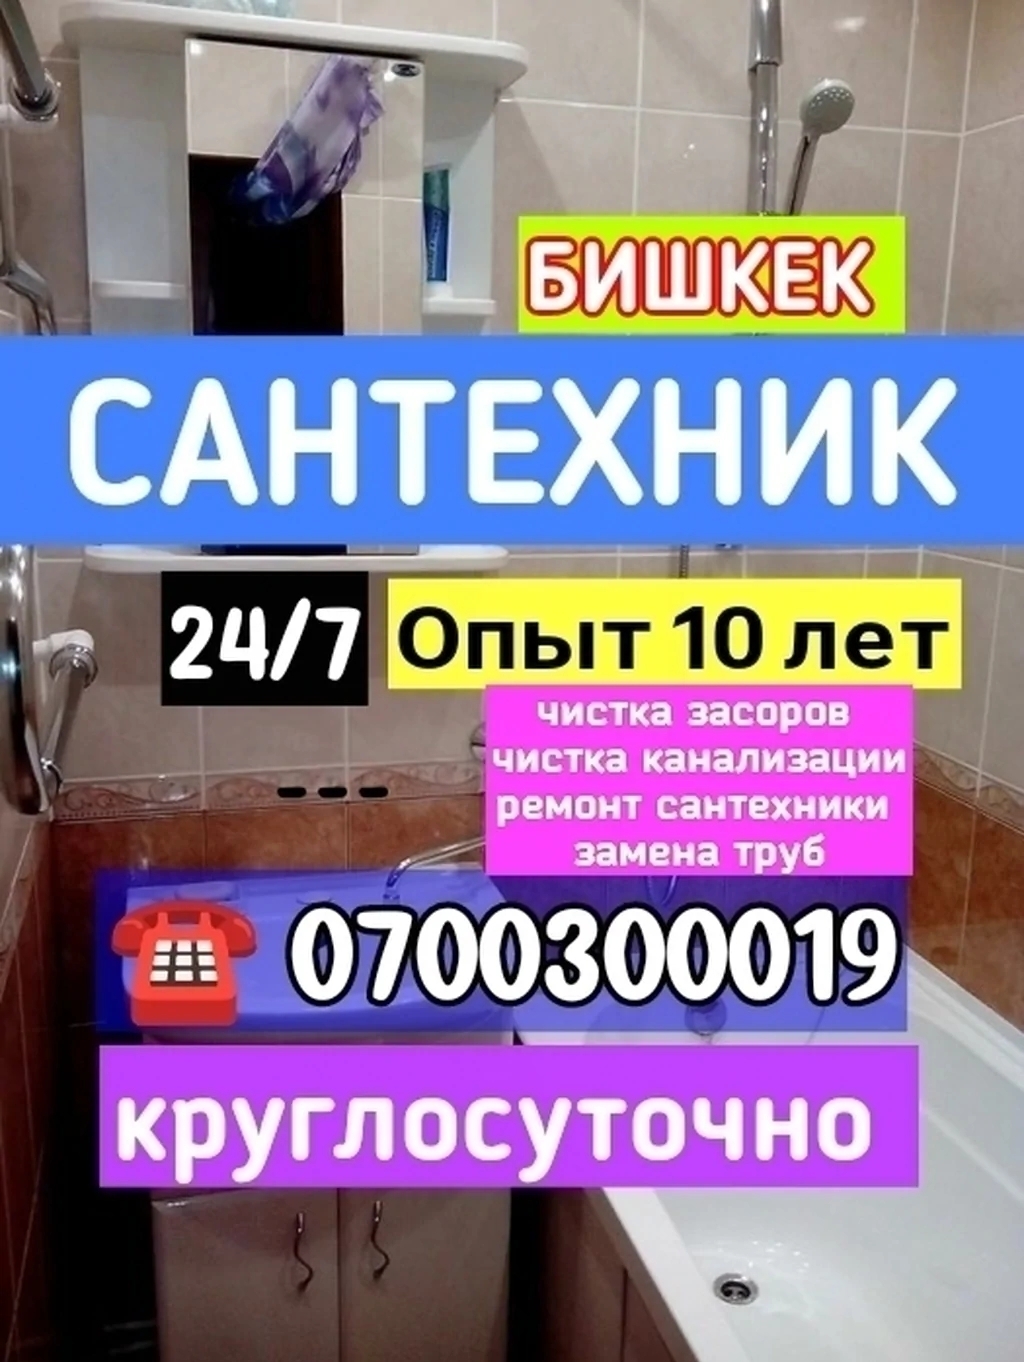 Сантехник Бишкек Круглосуточно по tel: +996(700)300019